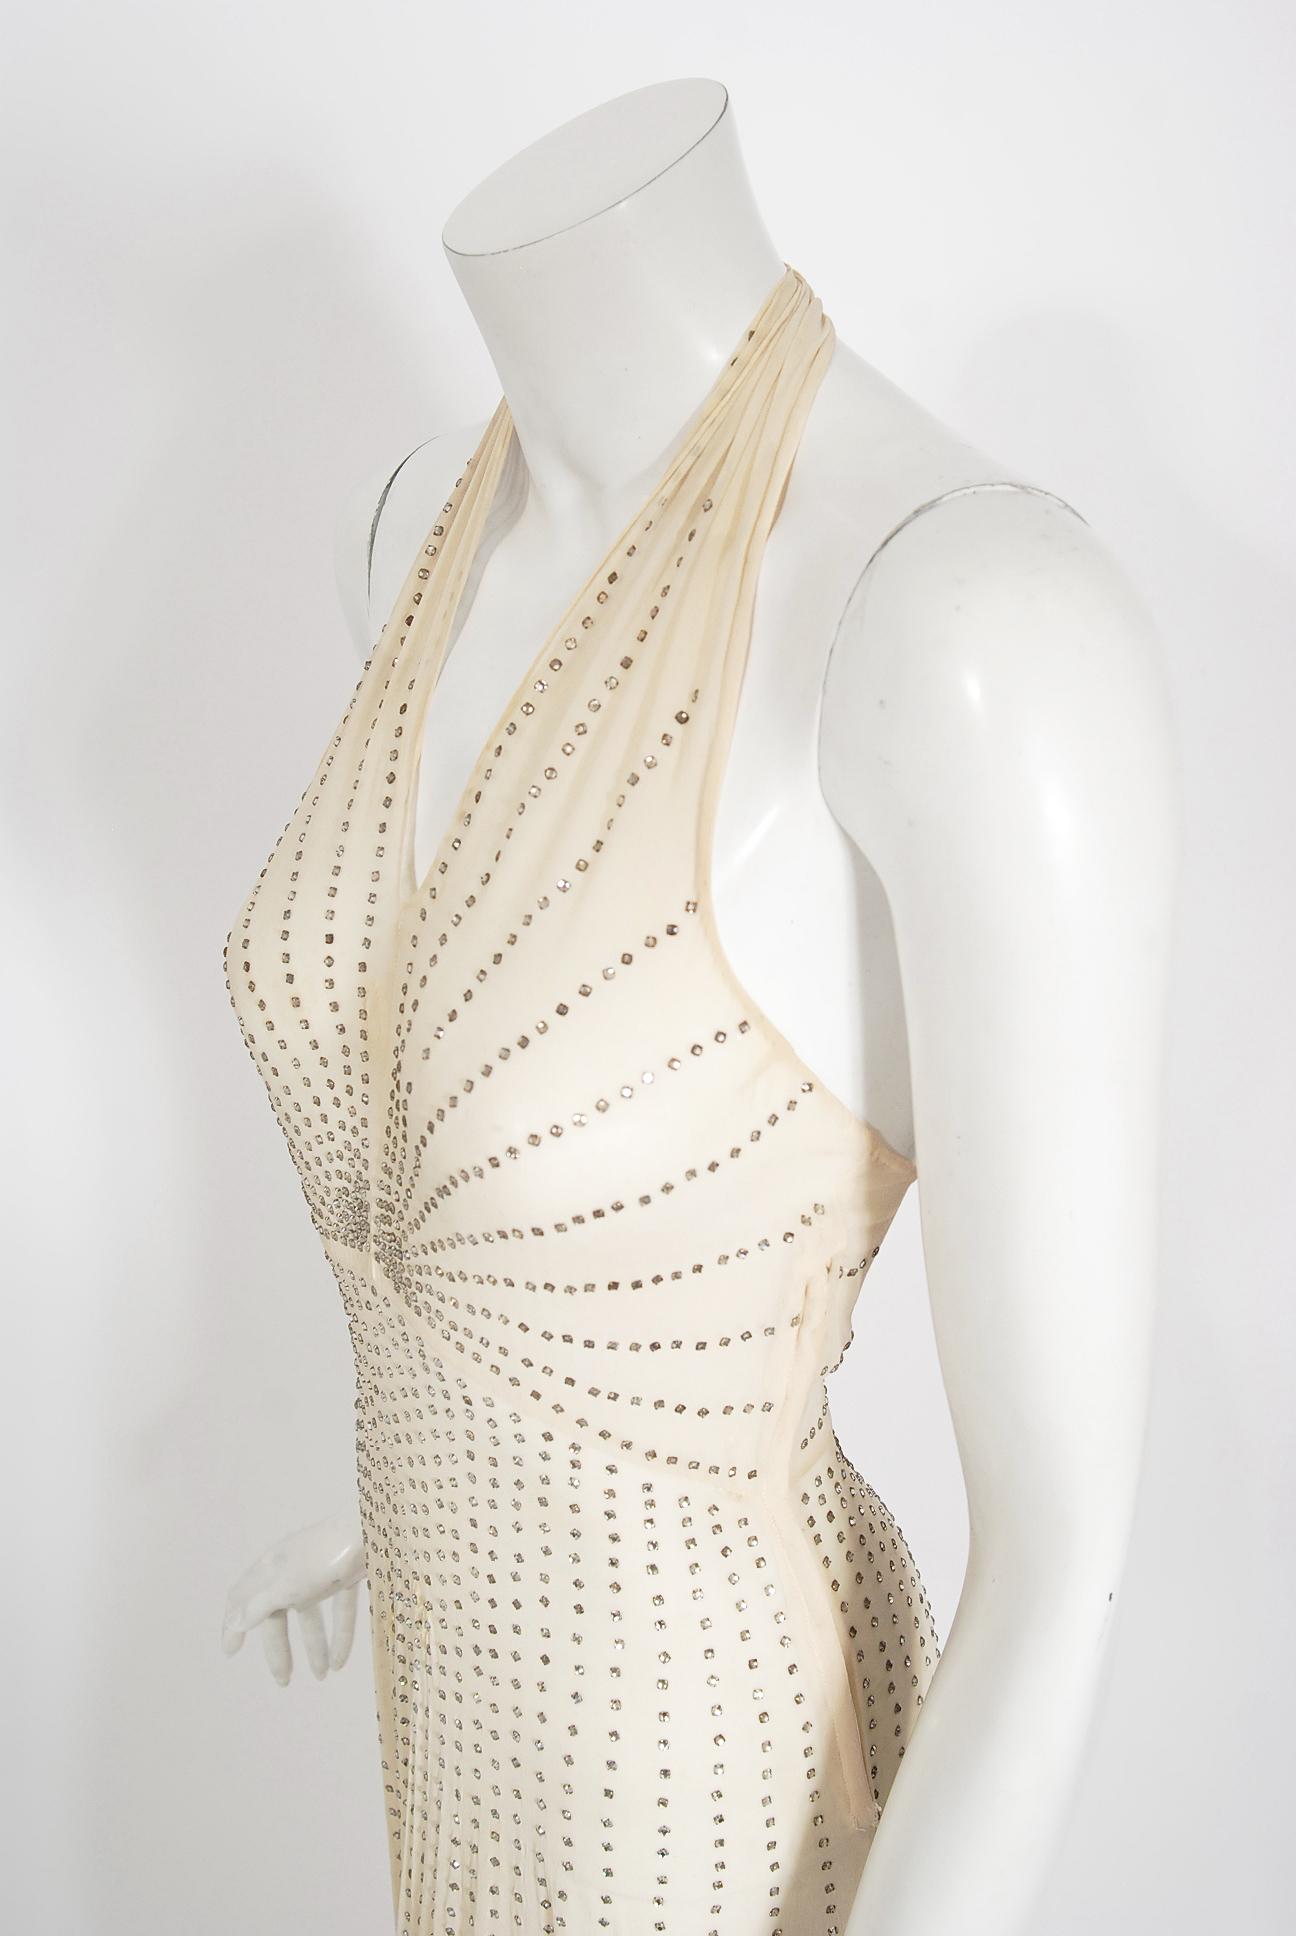 Women's Vintage 1930's Rhinestone Studded Sheer Ivory Chiffon Bias-Cut Halter Dress Gown